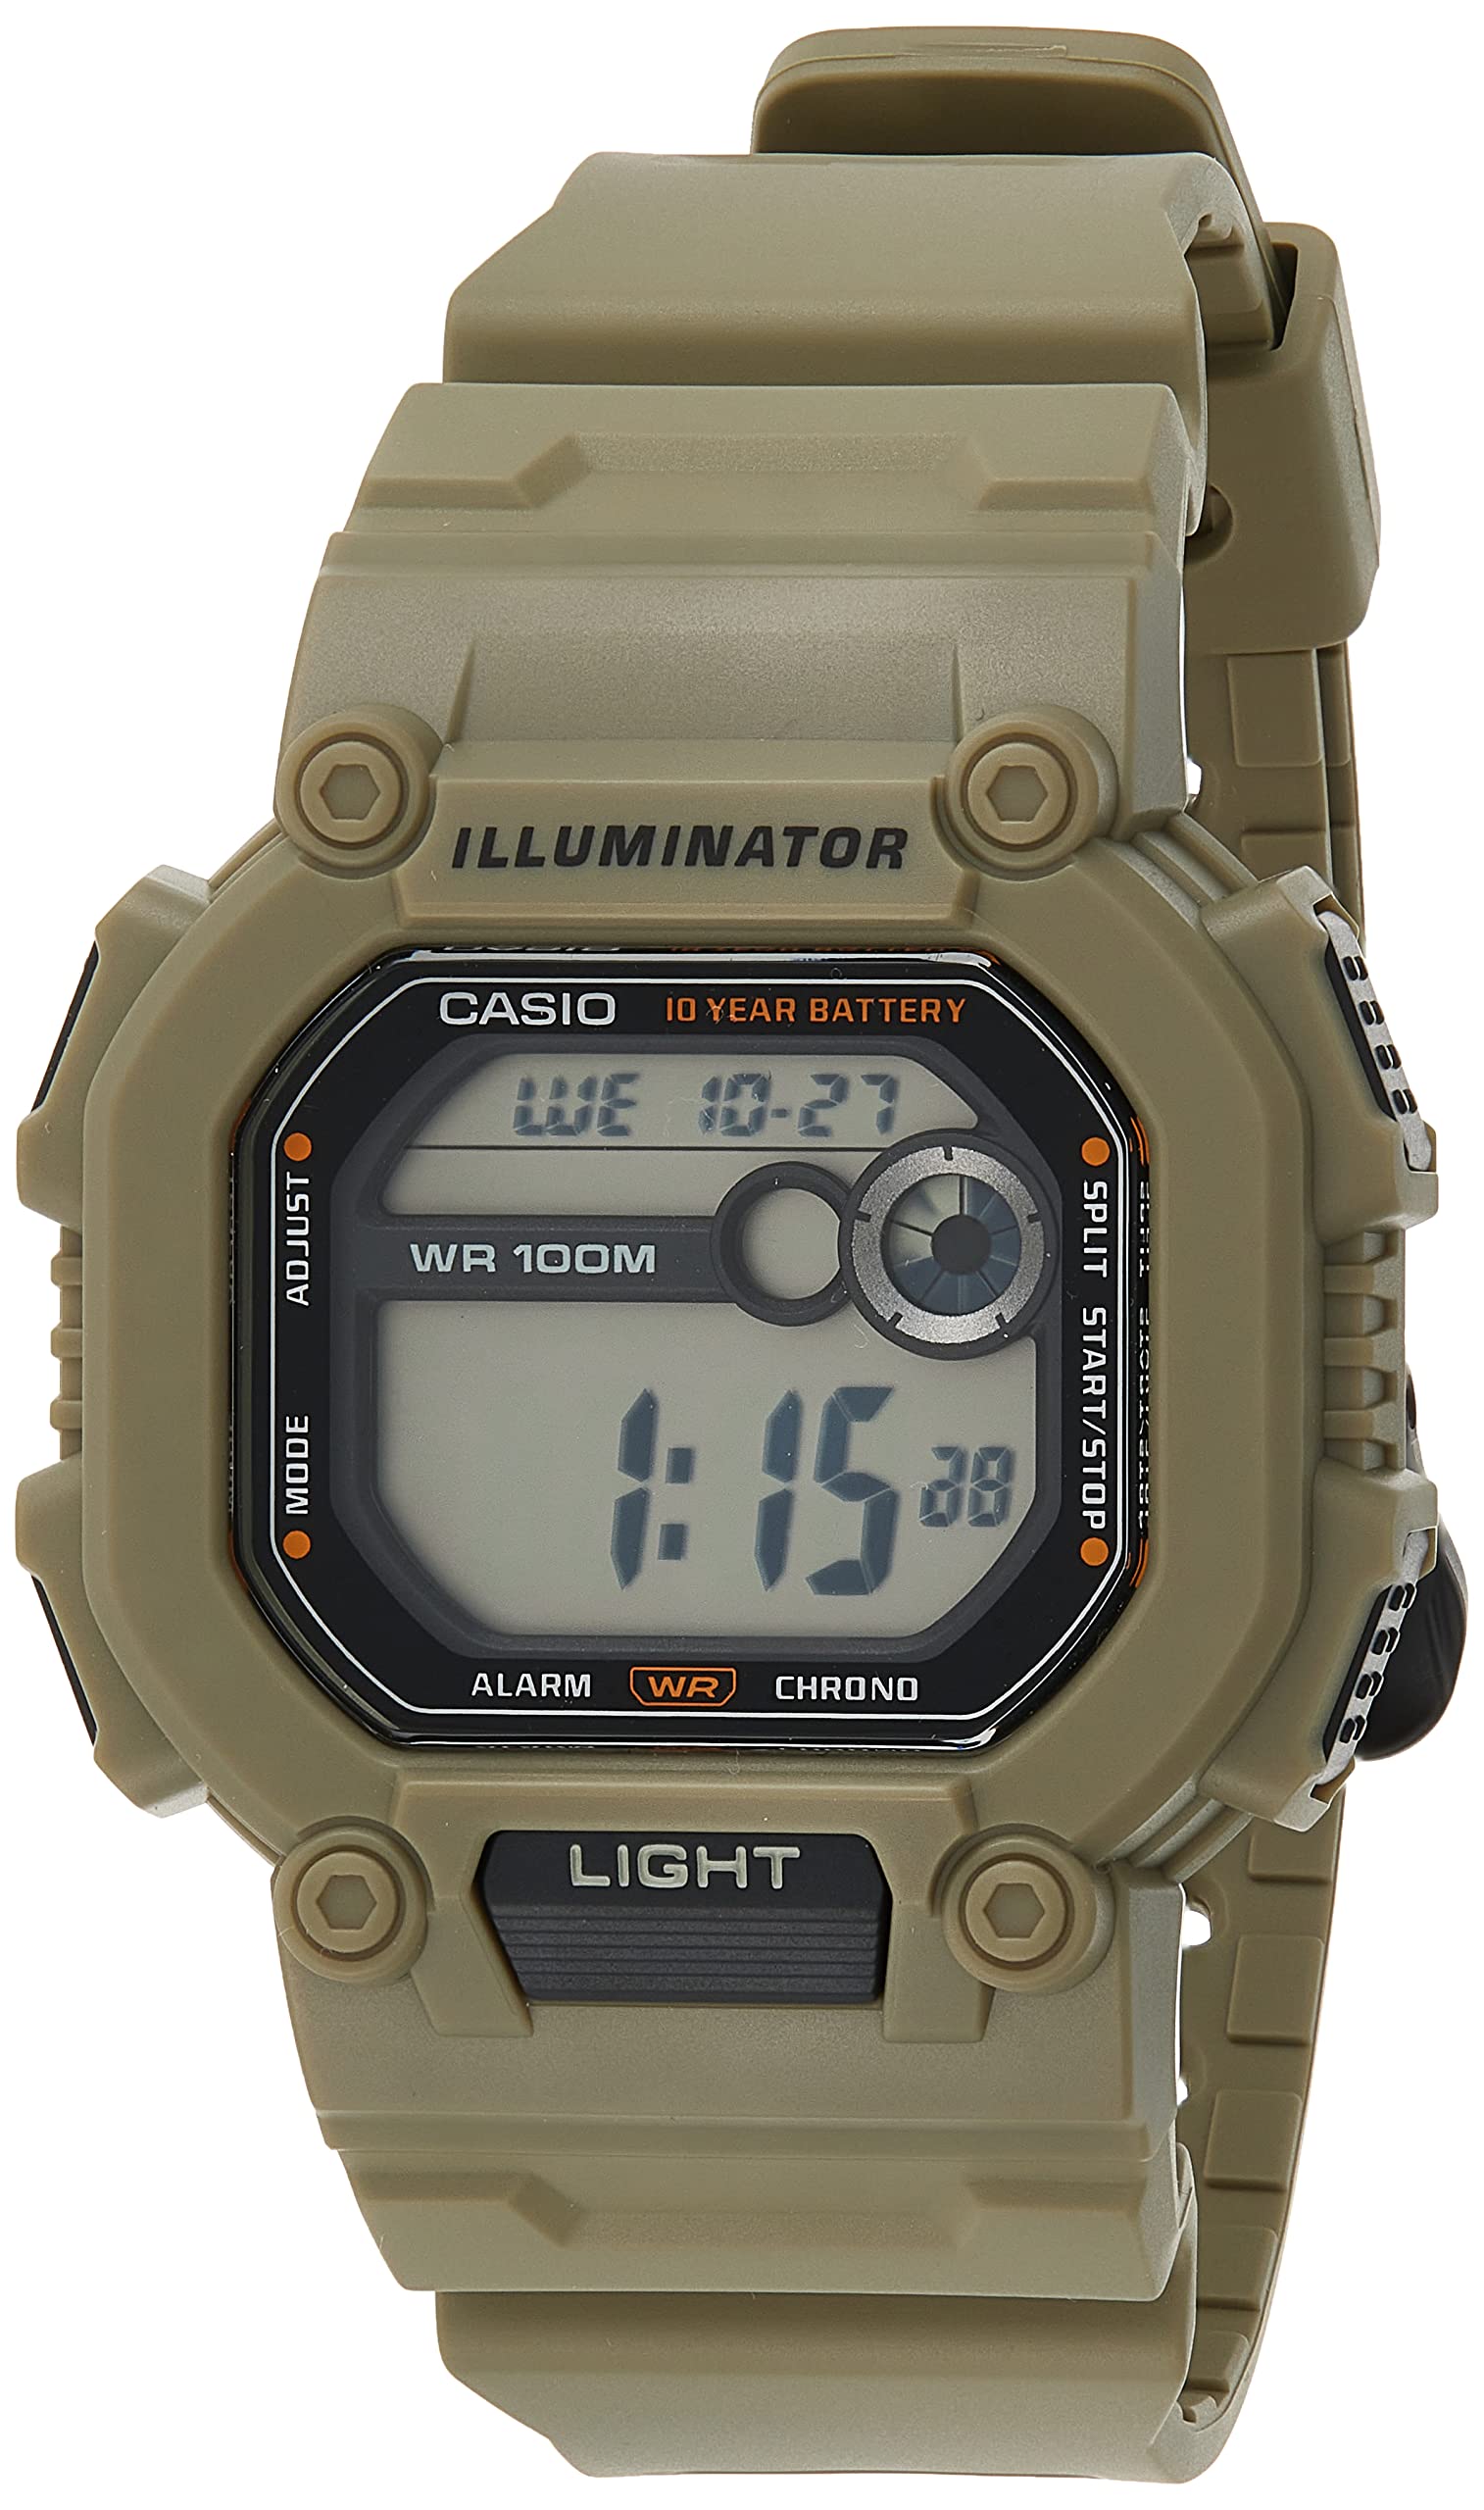 Casio LED Illuminator 10-Year Battery Extra Long Band Countdown Timer Daily Alarm Full-Auto Calendar Men's Digital Watch (Casio Model: W-737HX-5AV)